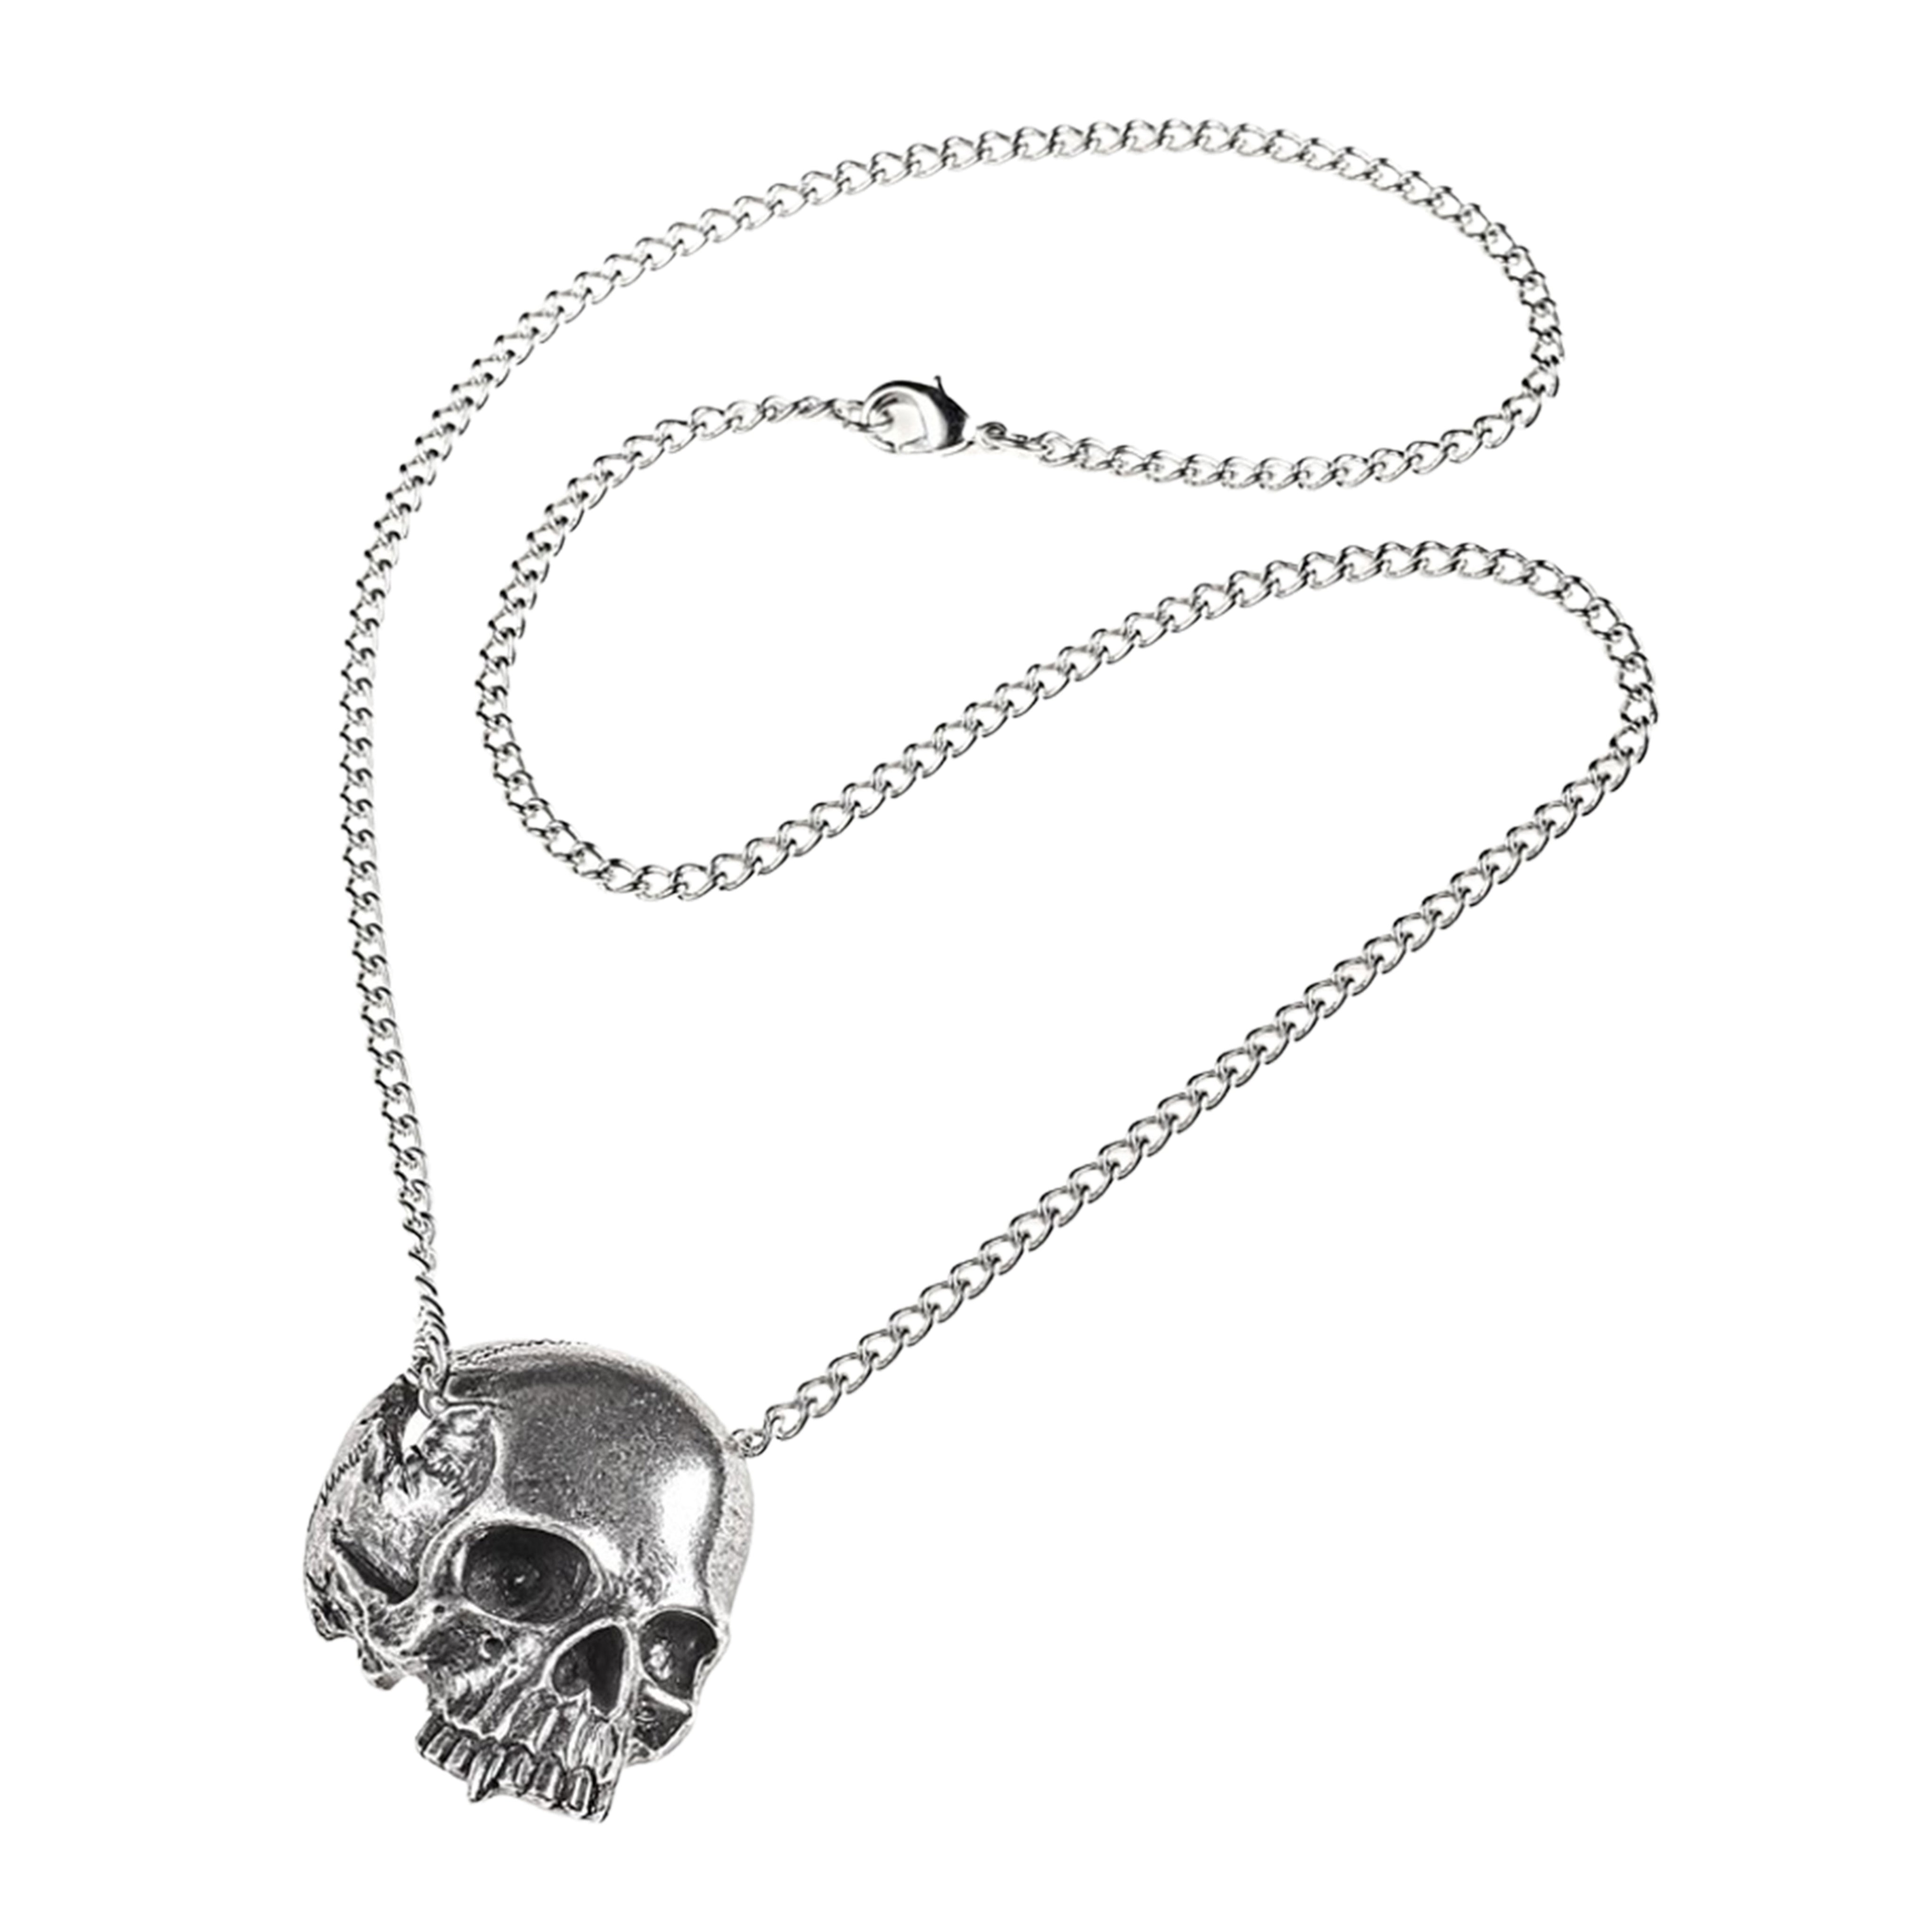 Jawless Human Skull Sliding Pendant Chain Necklace